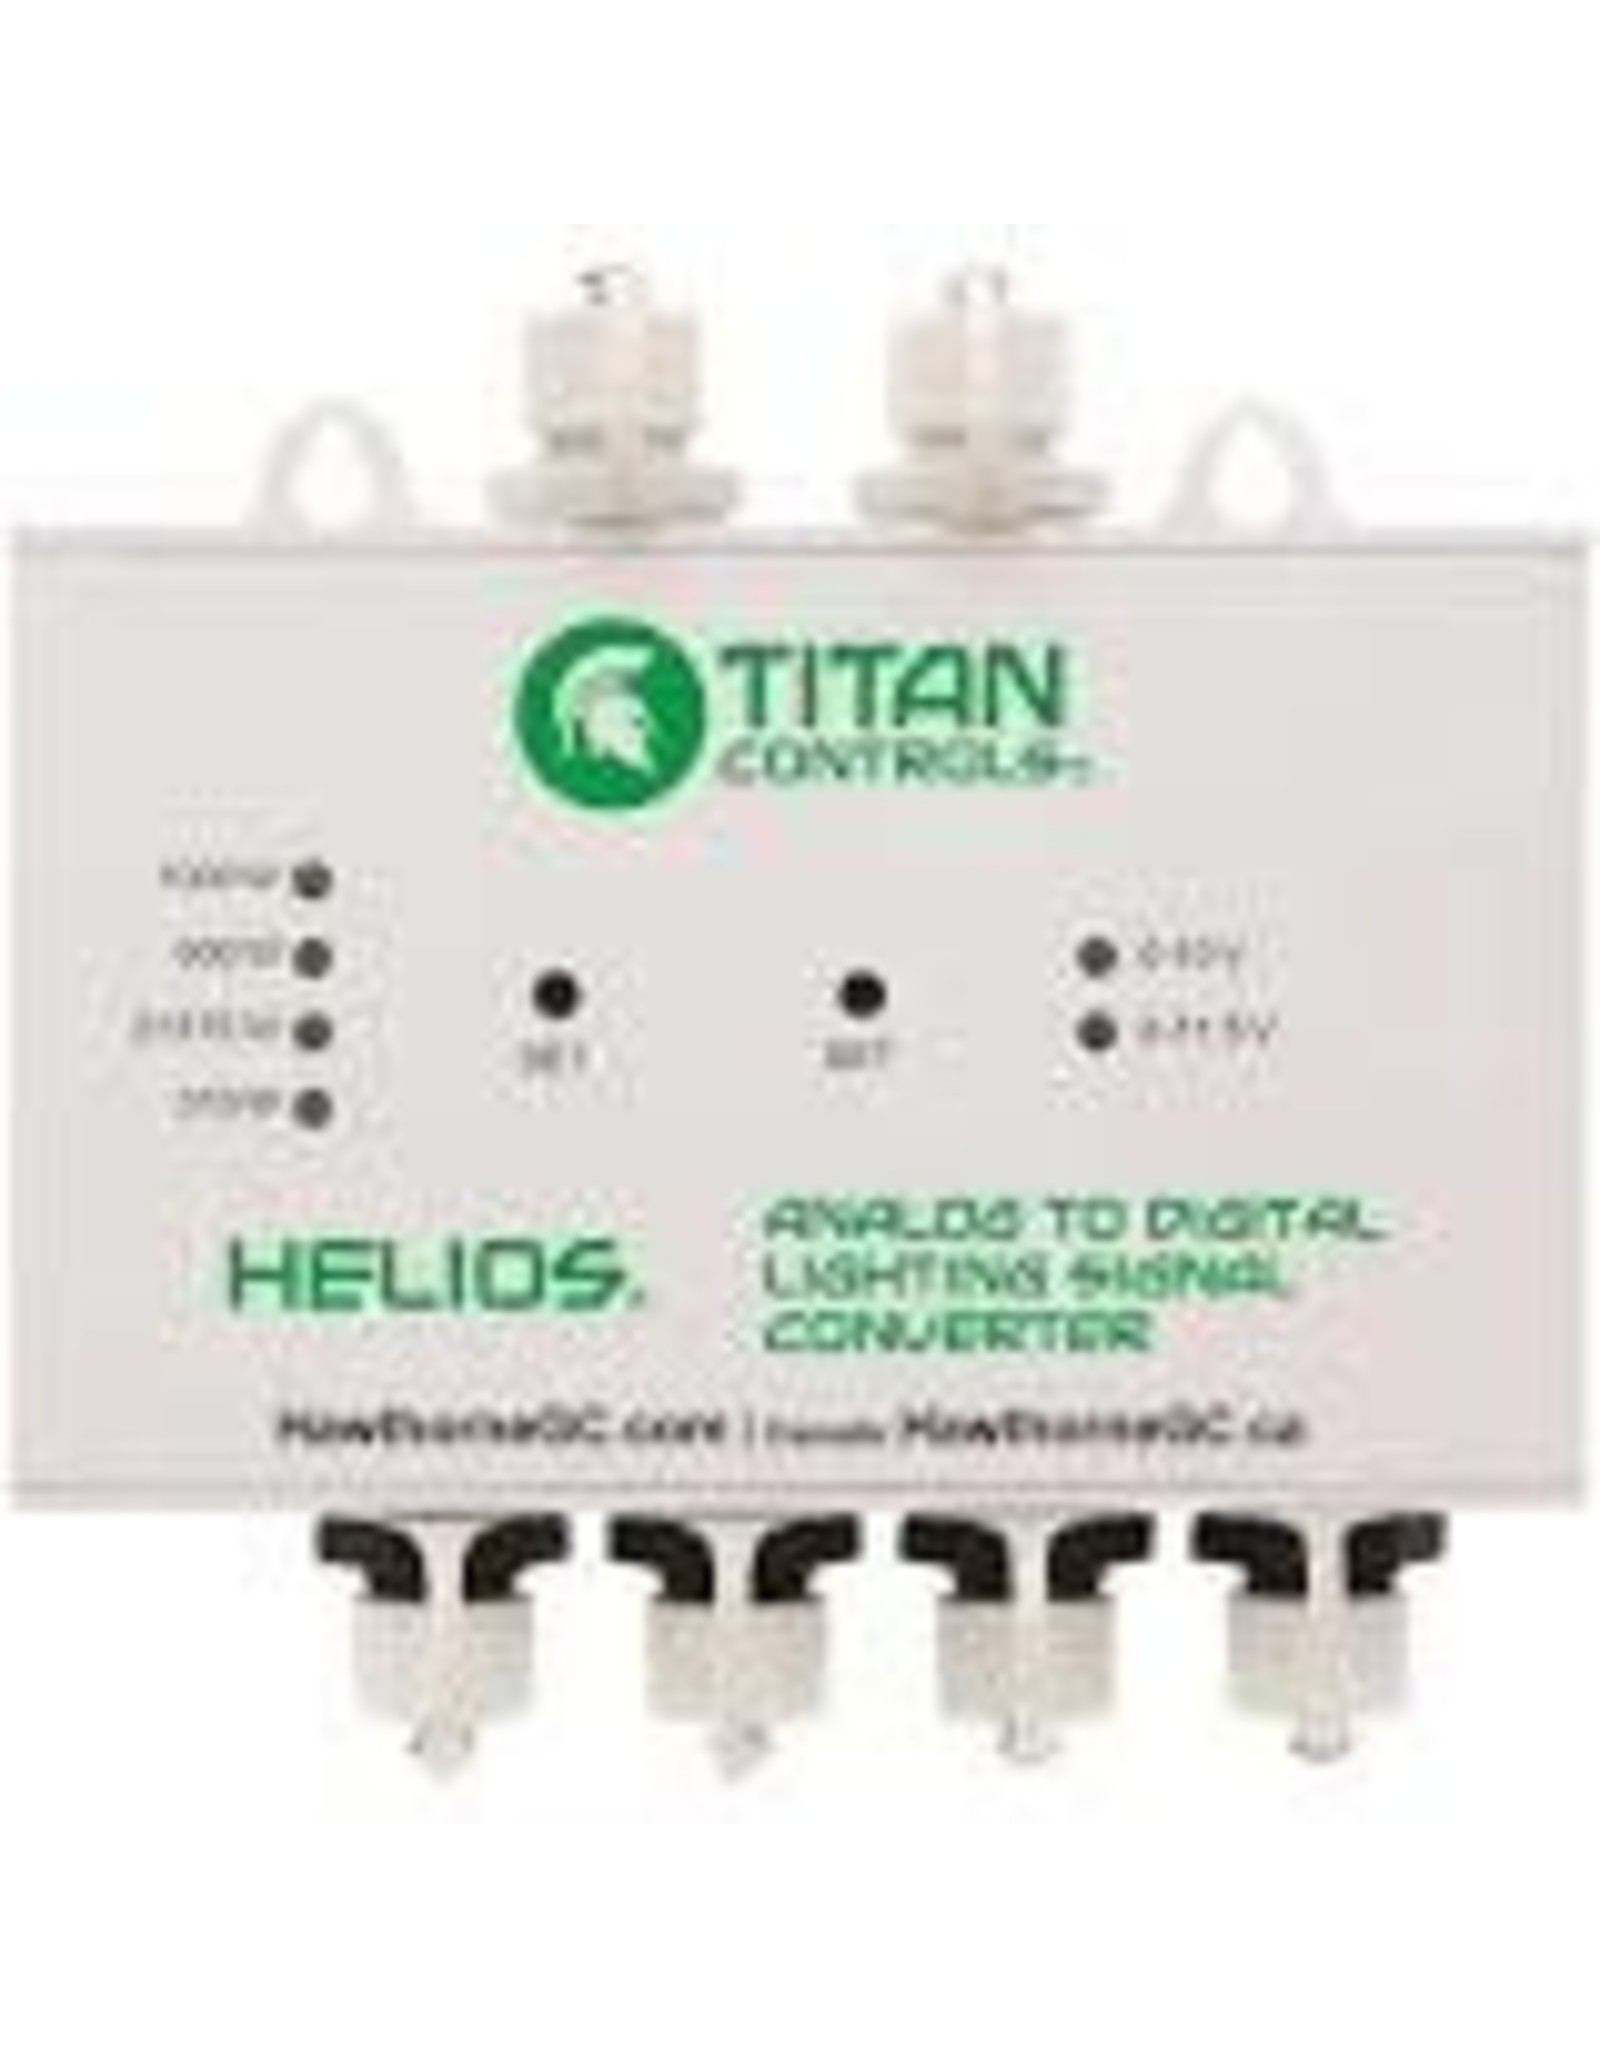 Titan Controls Titan Controls Helios Analog to Digital Signal Converter